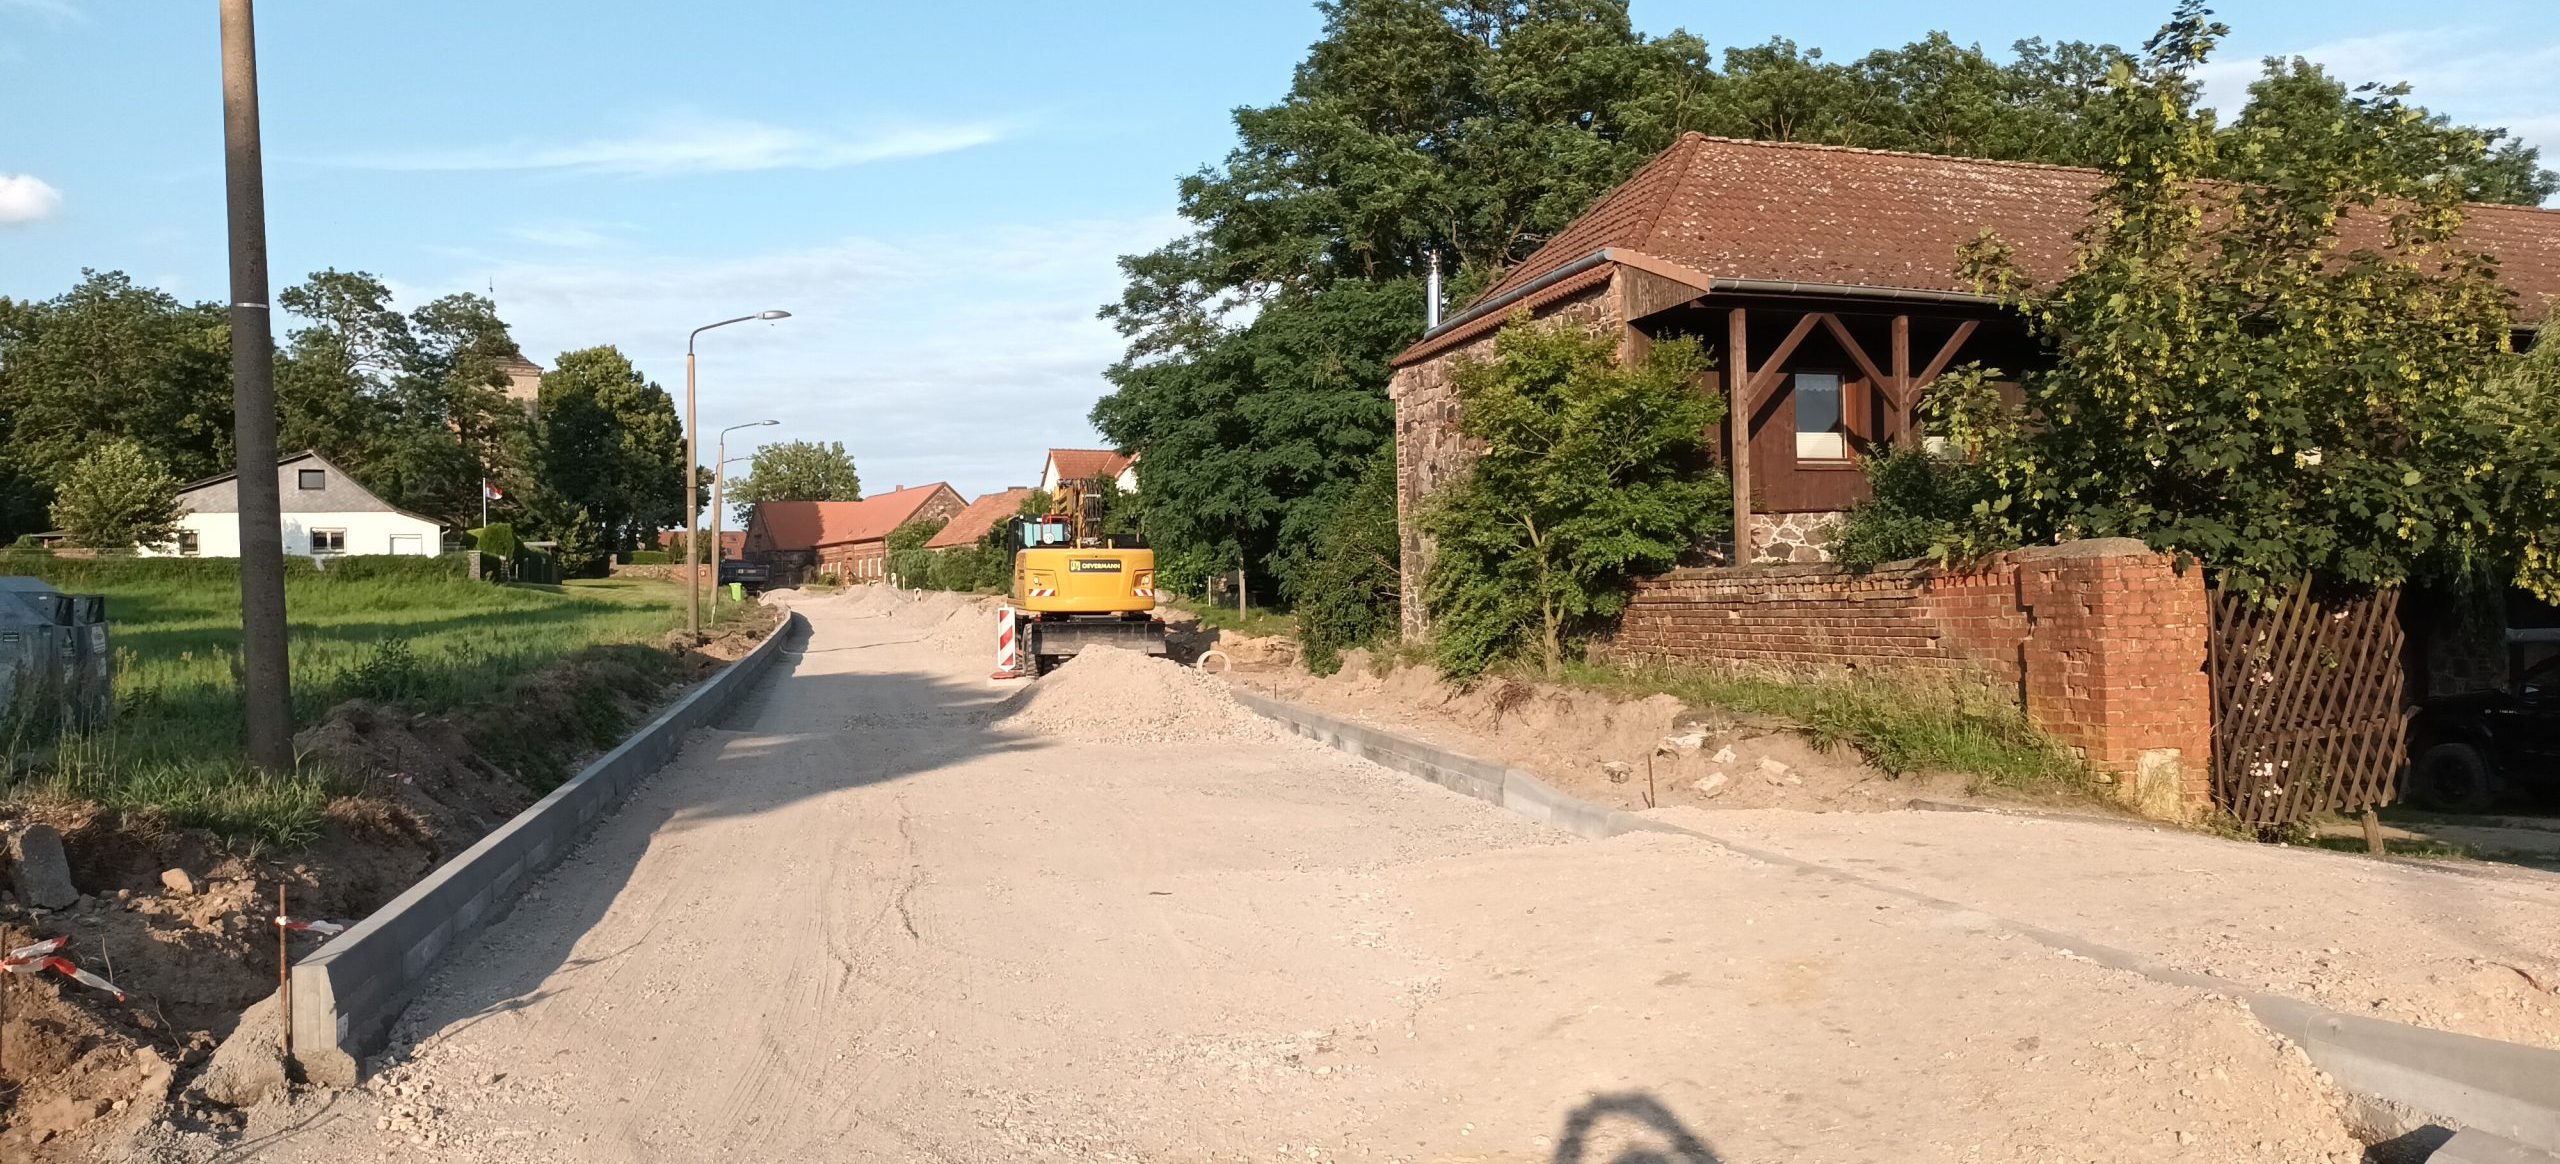 Straßenbau an der Ortsdfurchfahrt Ruhlsdorf